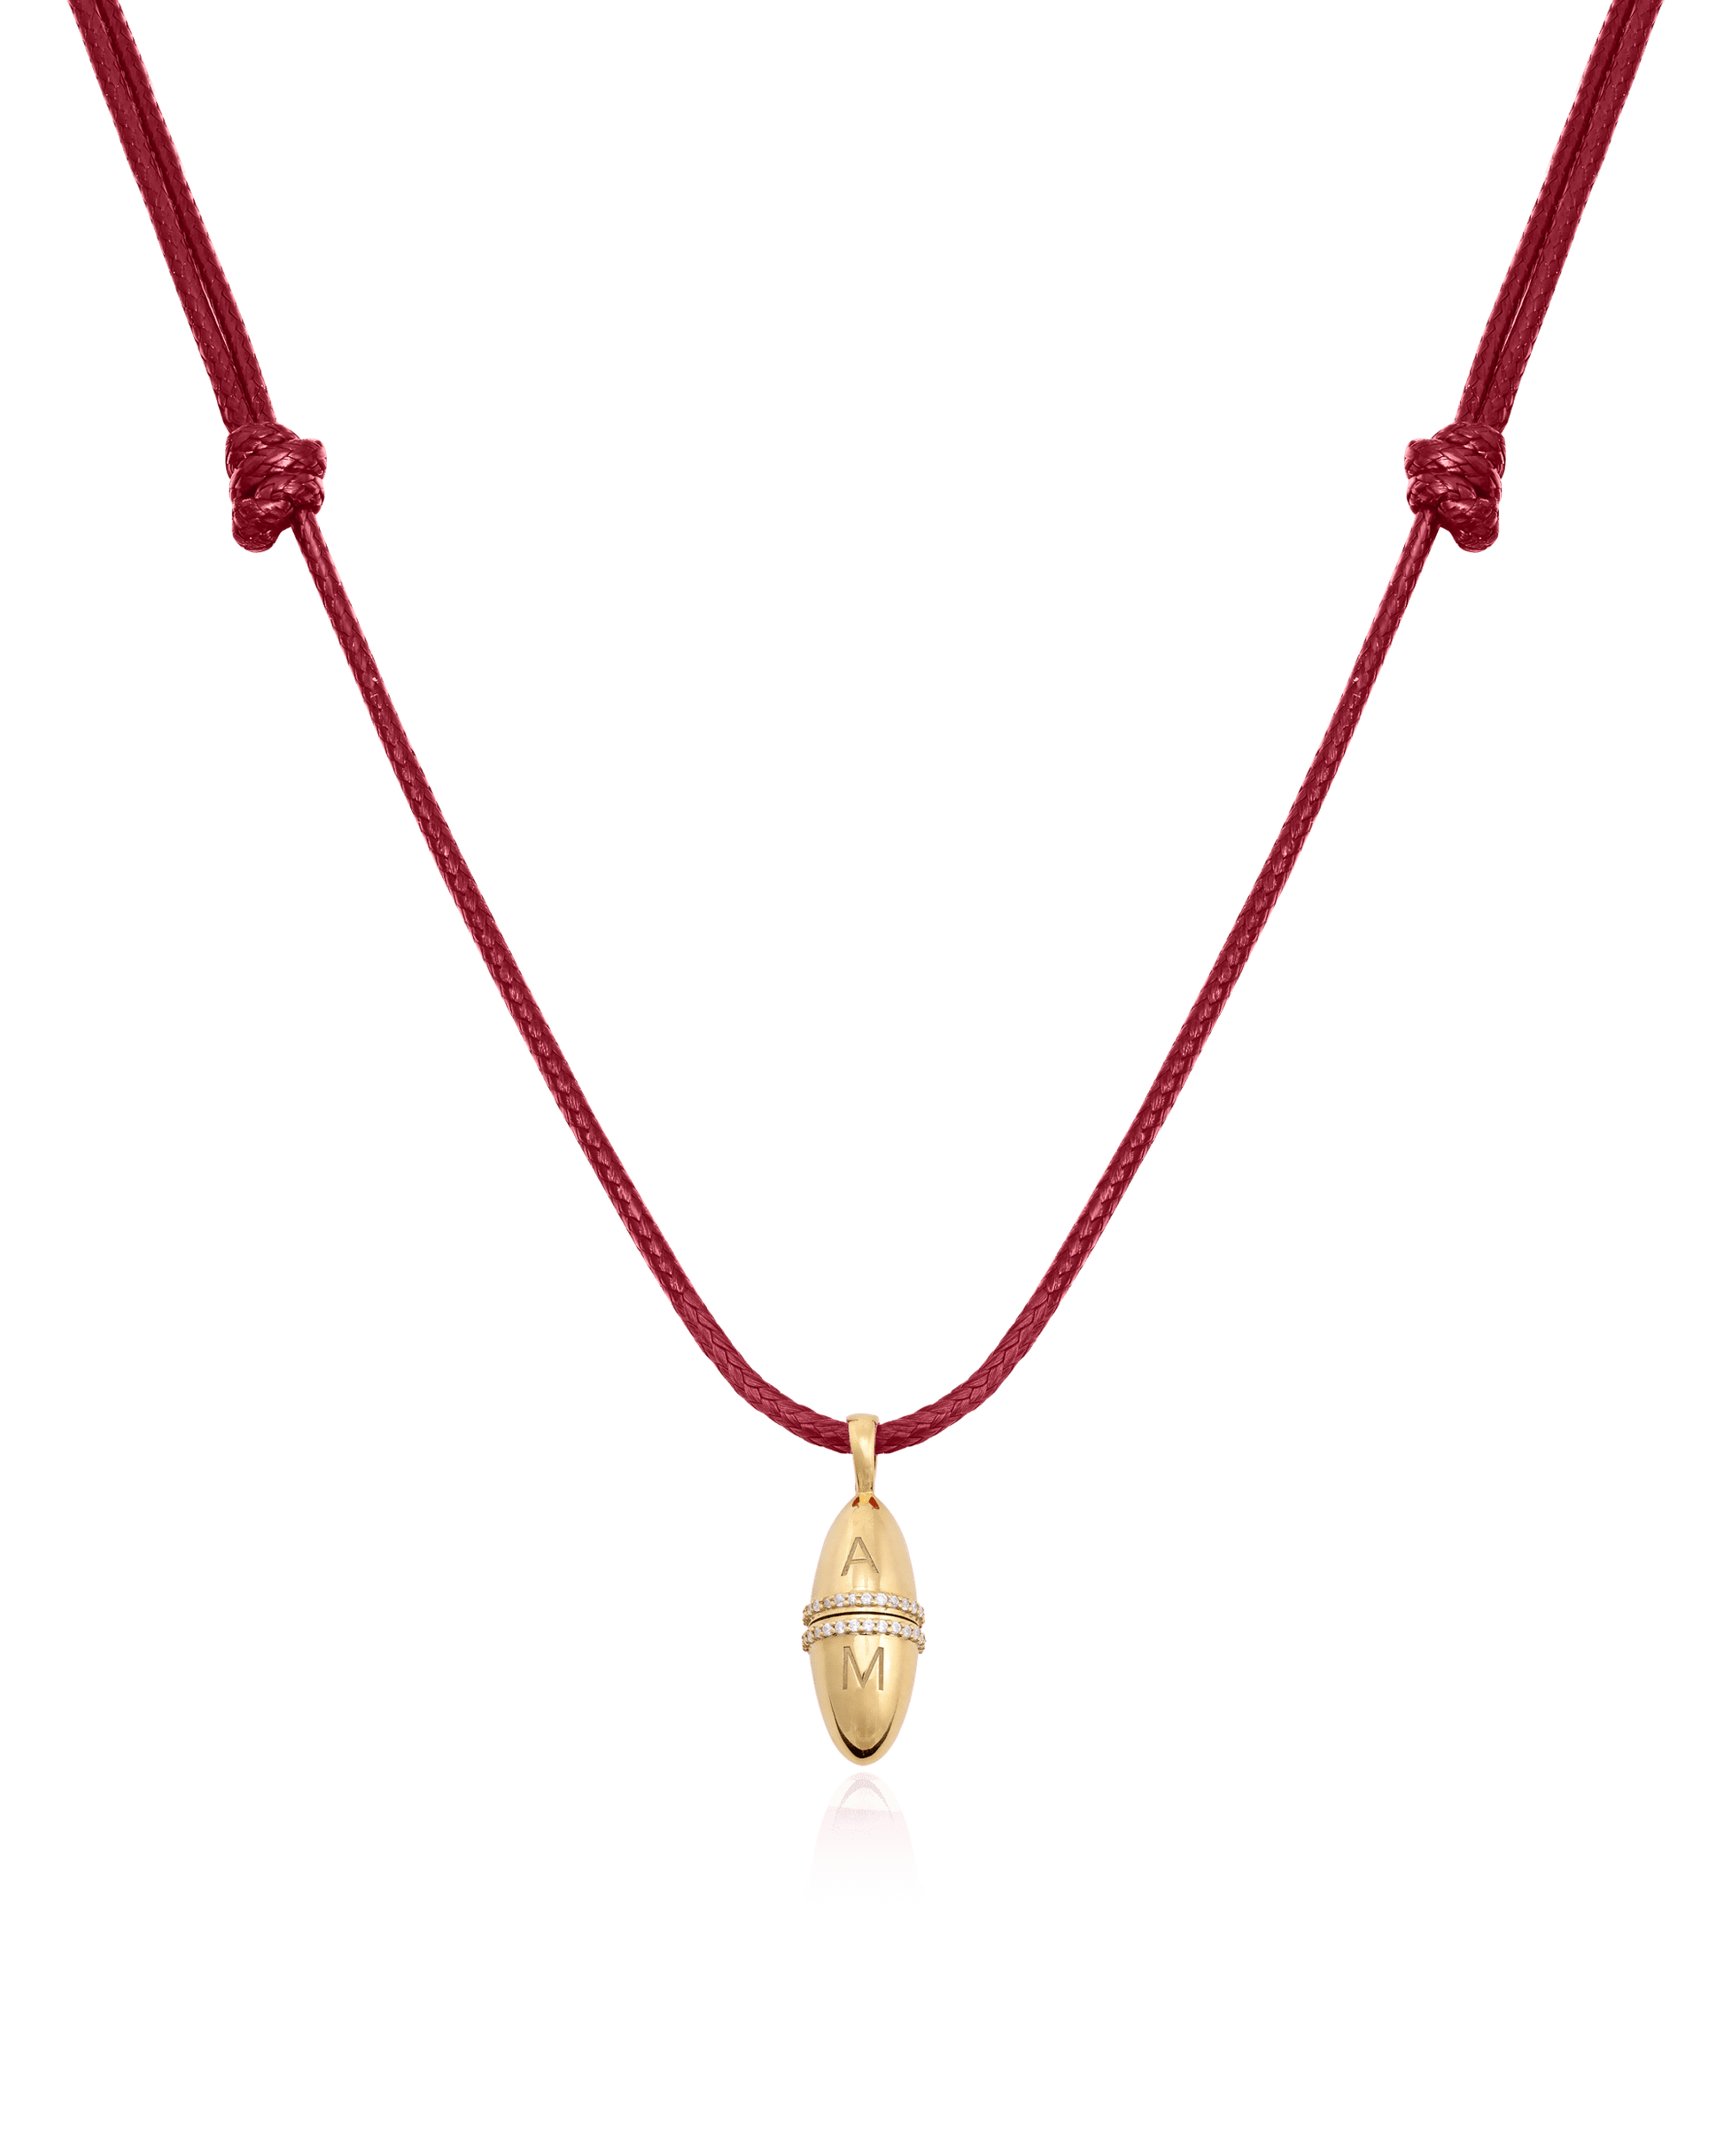 Fabergé Cord Necklace - 18K Gold Vermeil Necklaces magal-dev Red Adjustable Leather Cord 20"-24" 